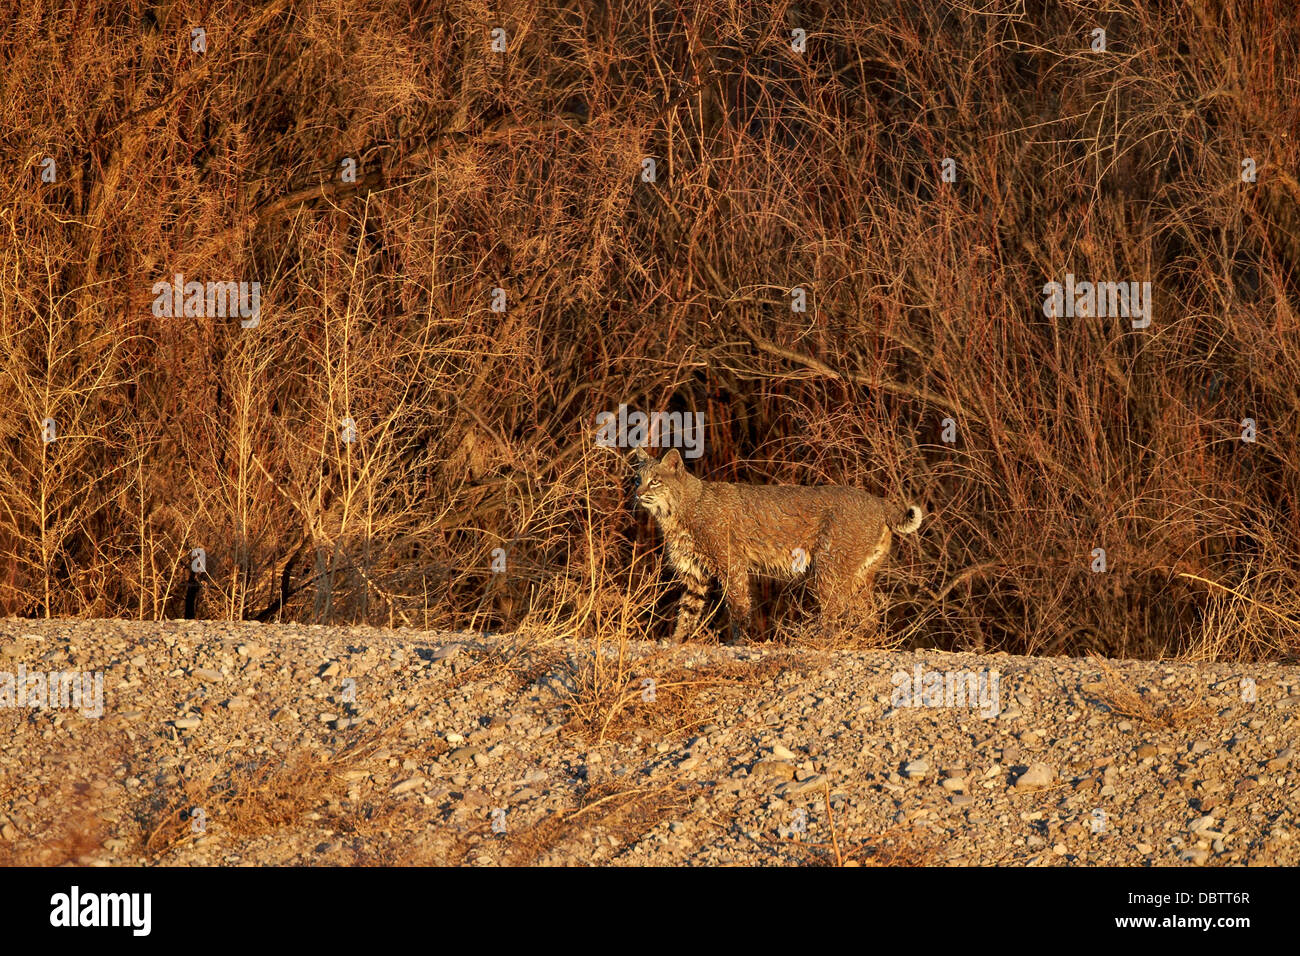 Bobcat (Lynx rufus), Bosque del Apache National Wildlife Refuge, New Mexico, United States of America, North America Stock Photo